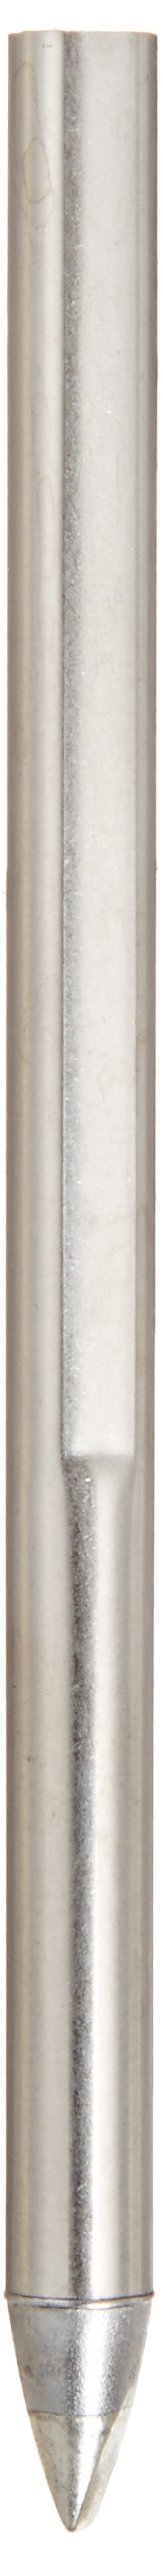  [AUSTRALIA] - Metcal SSC-636A Series SSC Hand Soldering Cartridge for Temperature Sensitive Applications, 675°F Maximum Tip Temperature, Chisel 30°, 2.5mm Tip Size, 9.9mm Tip Length